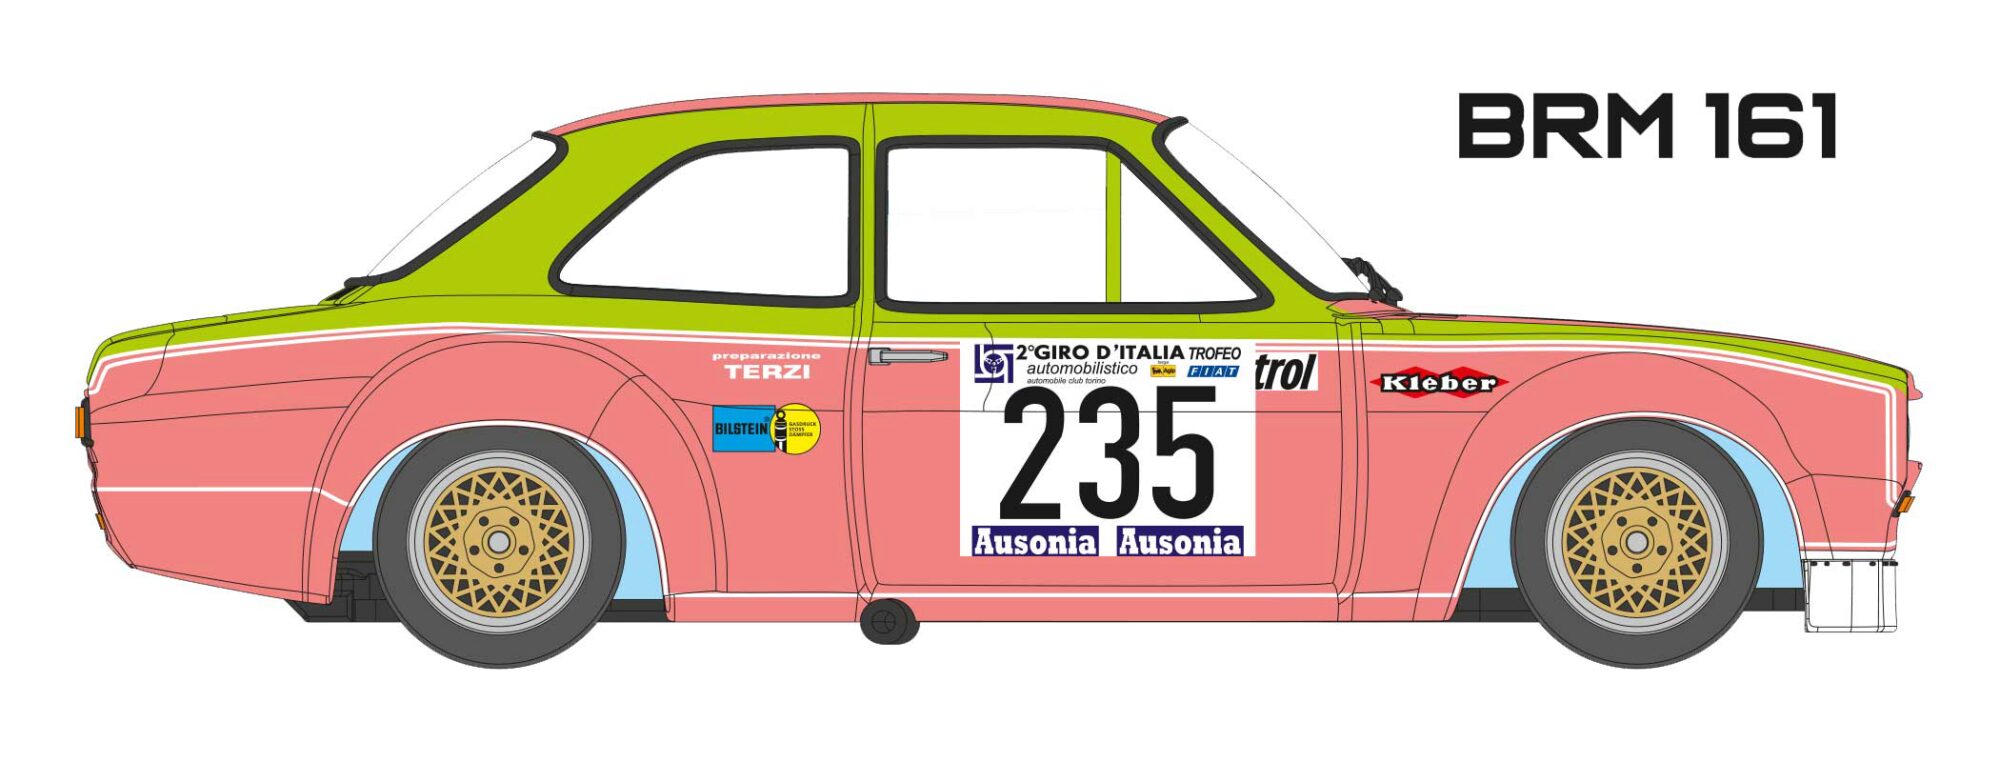 BRM MODEL CARS BRM161 ESCORT RS2000 MK1 - JOLLY CLUB #235 - 5th GIRO D'ITALIA 1974 - Finotto, Colzani